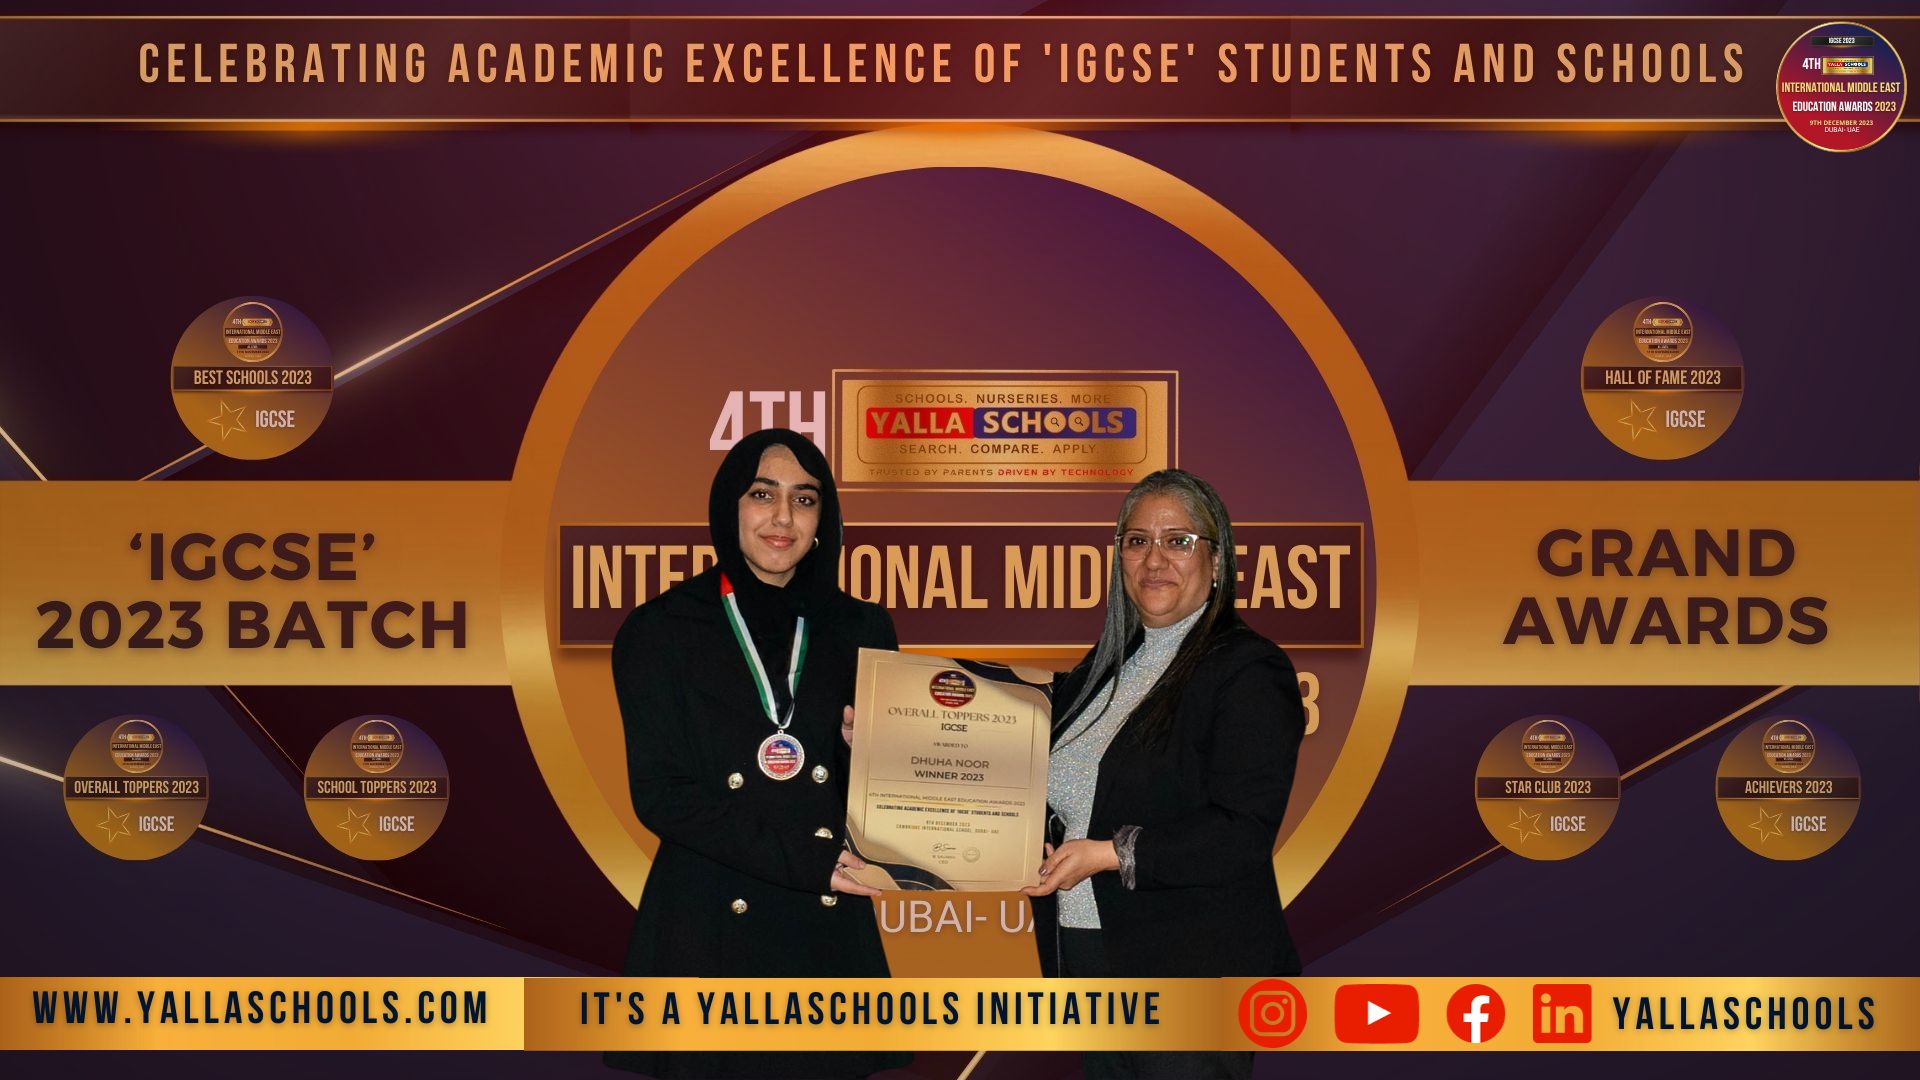 4th_International_Middle_East_Education_Grand_Awards_2023_(IGCSE)